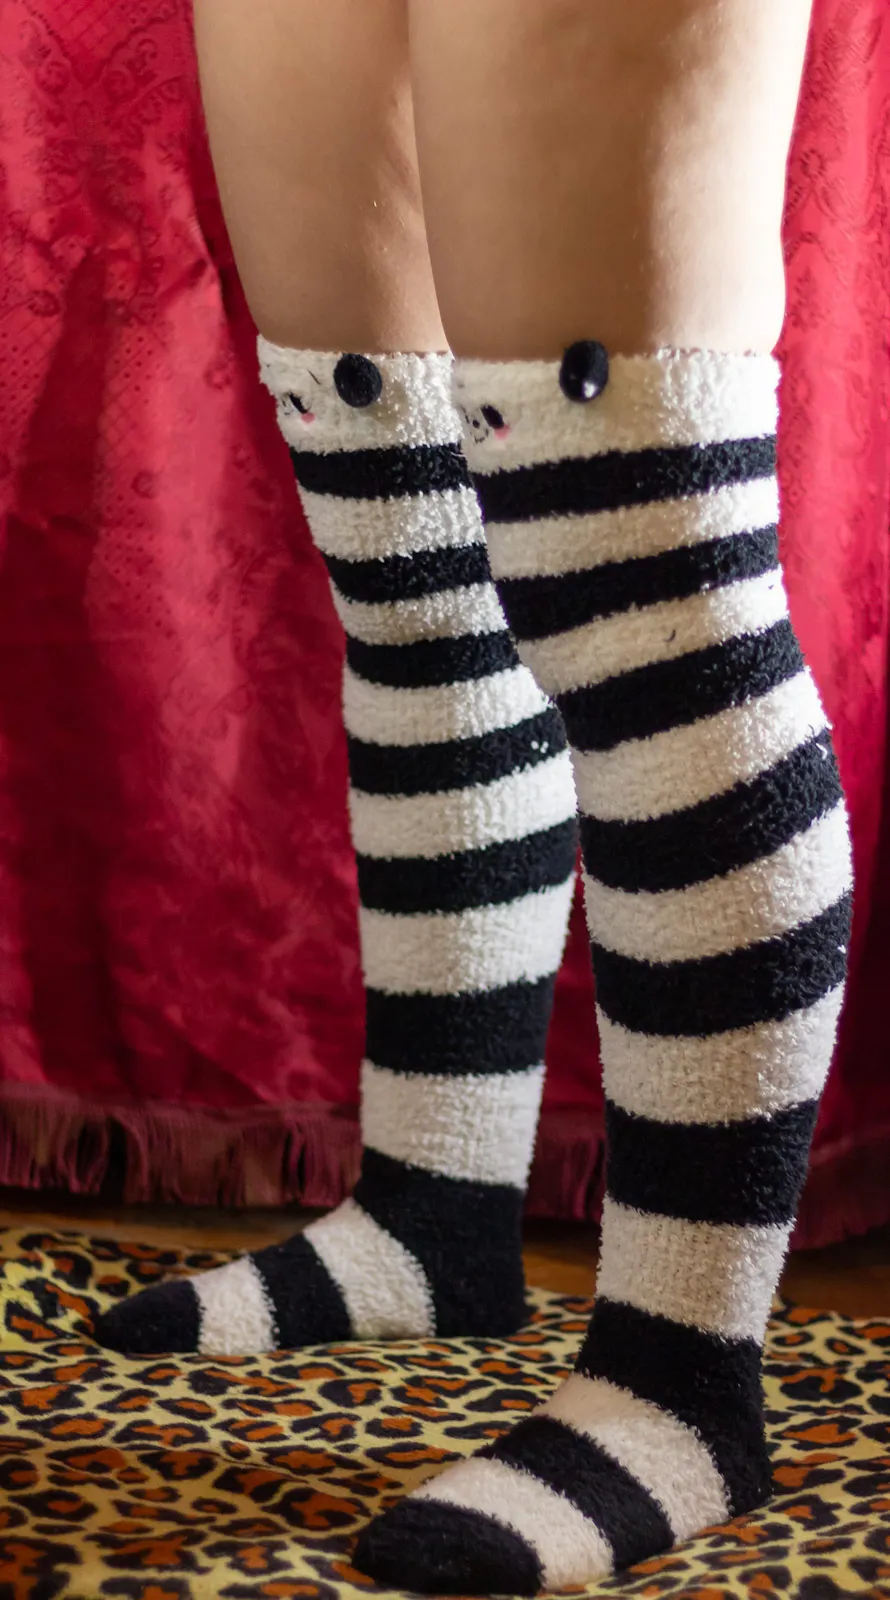 Winter Warm Coral Fleece Long thigh high Socks Girls Women Animal Modeling Stockings Striped Cute Knee Socks medias de mujer|Stockings|   - AliExpress